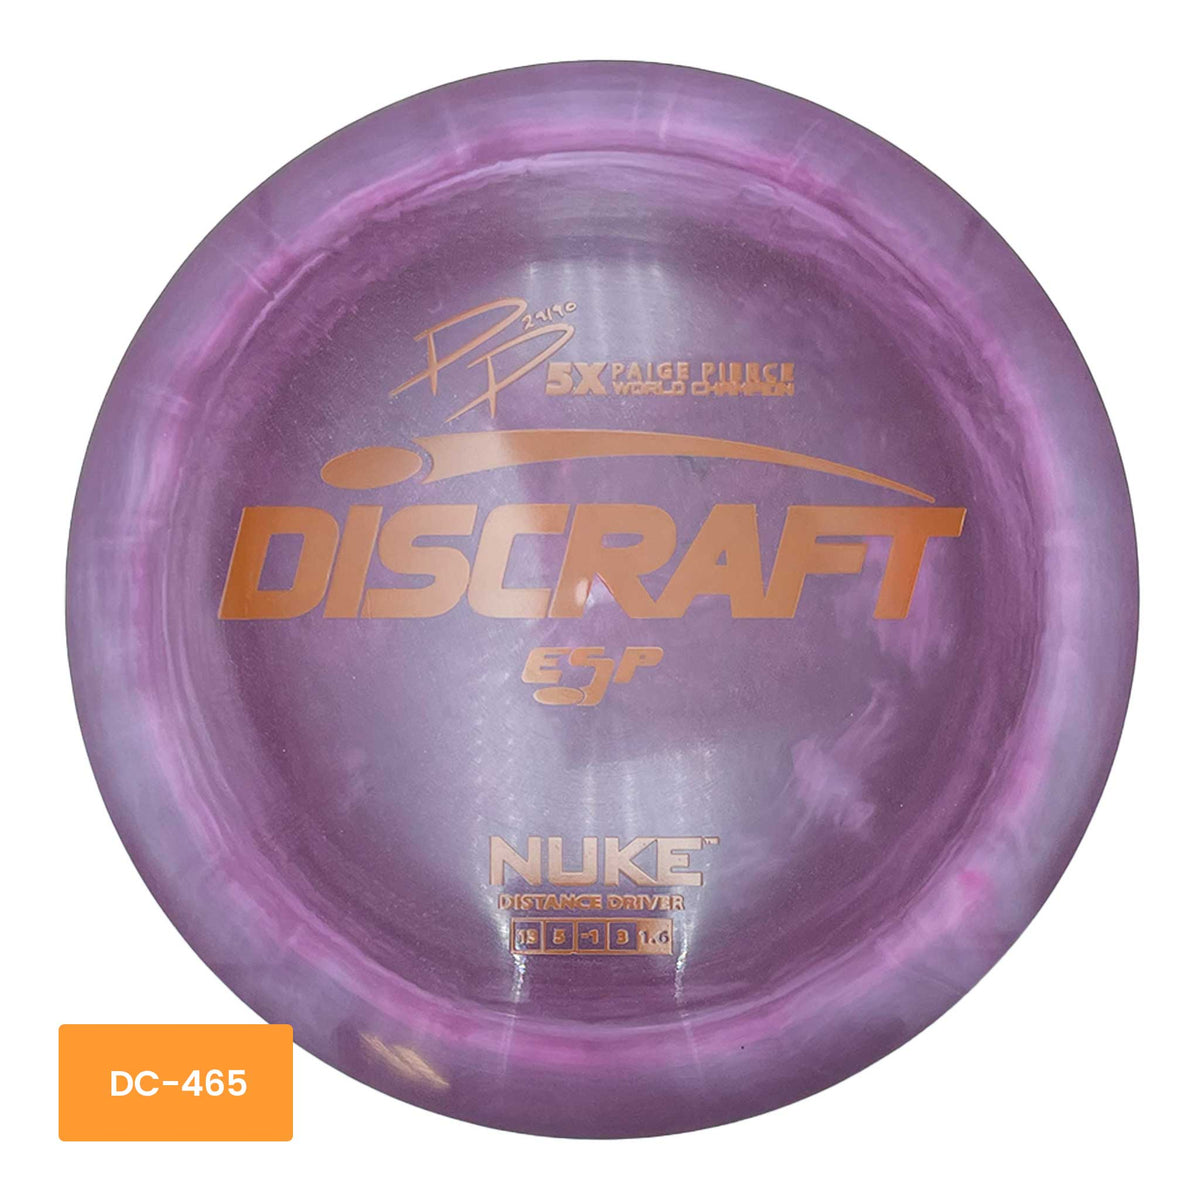 Discraft ESP Nuke distance driver - Purple